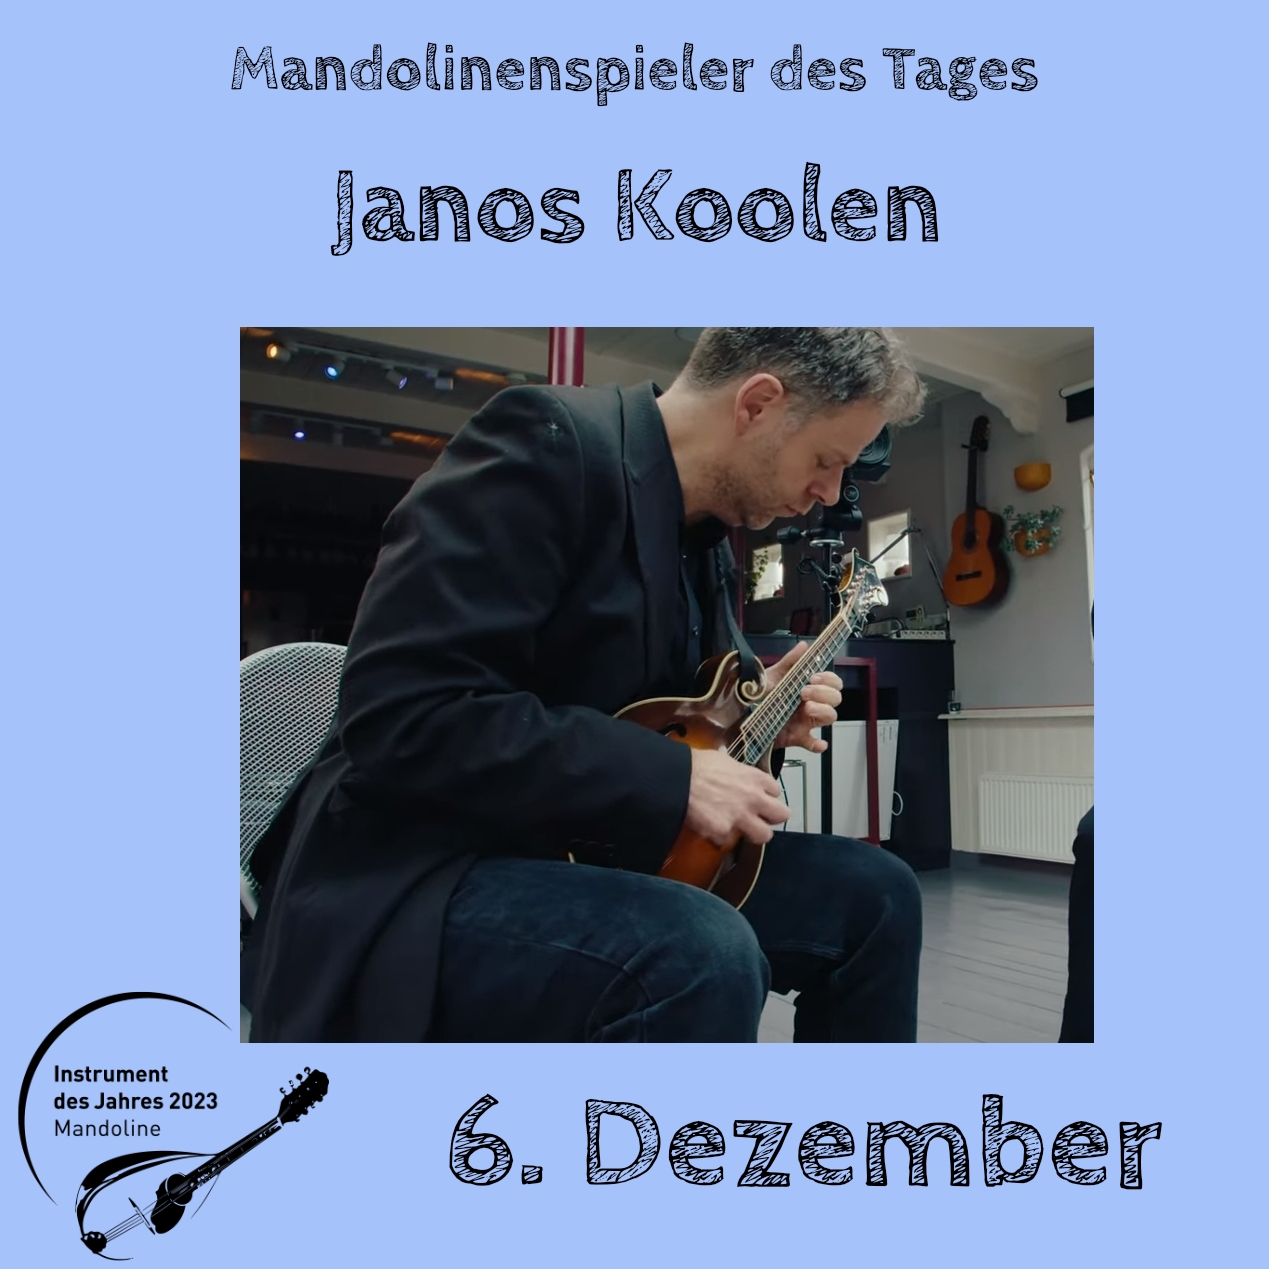 6. Dezember - Janos Koolen Instrument des Jahres 2023 Mandolinenspieler Mandolinenspielerin des Tages